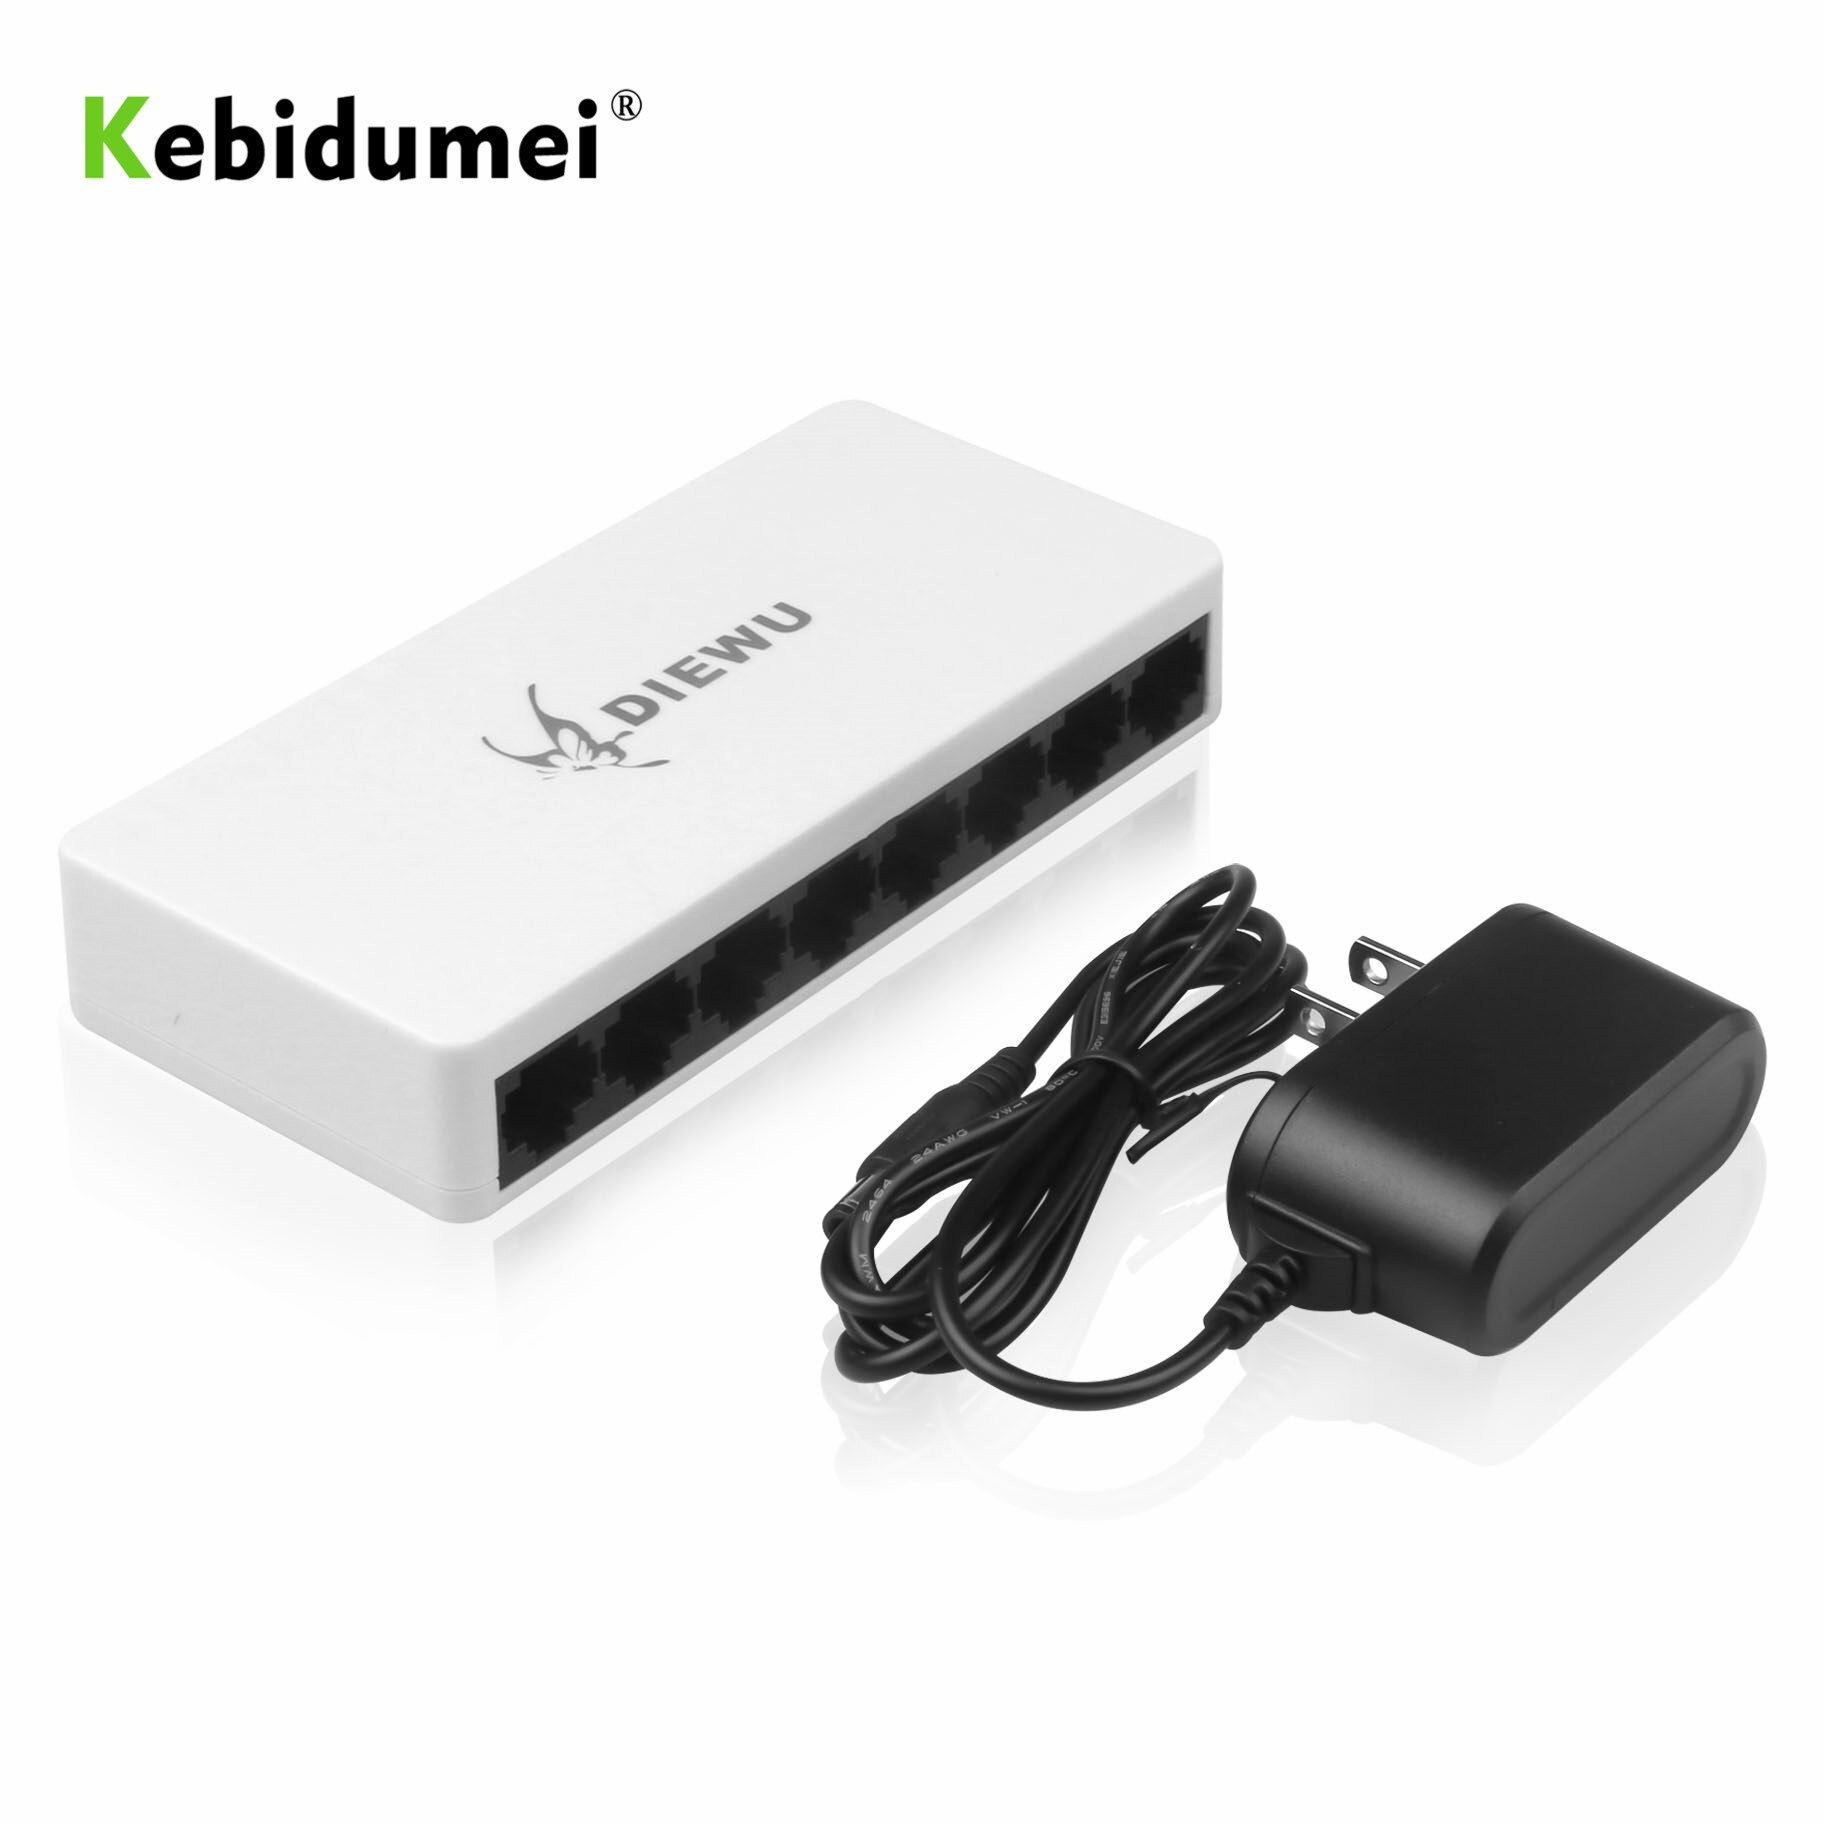 Kebidumei 8-Poort Ethernet Network Switch HUB Desktop Mini Snelle LAN Switcher Adapter met EU/US Power Supply